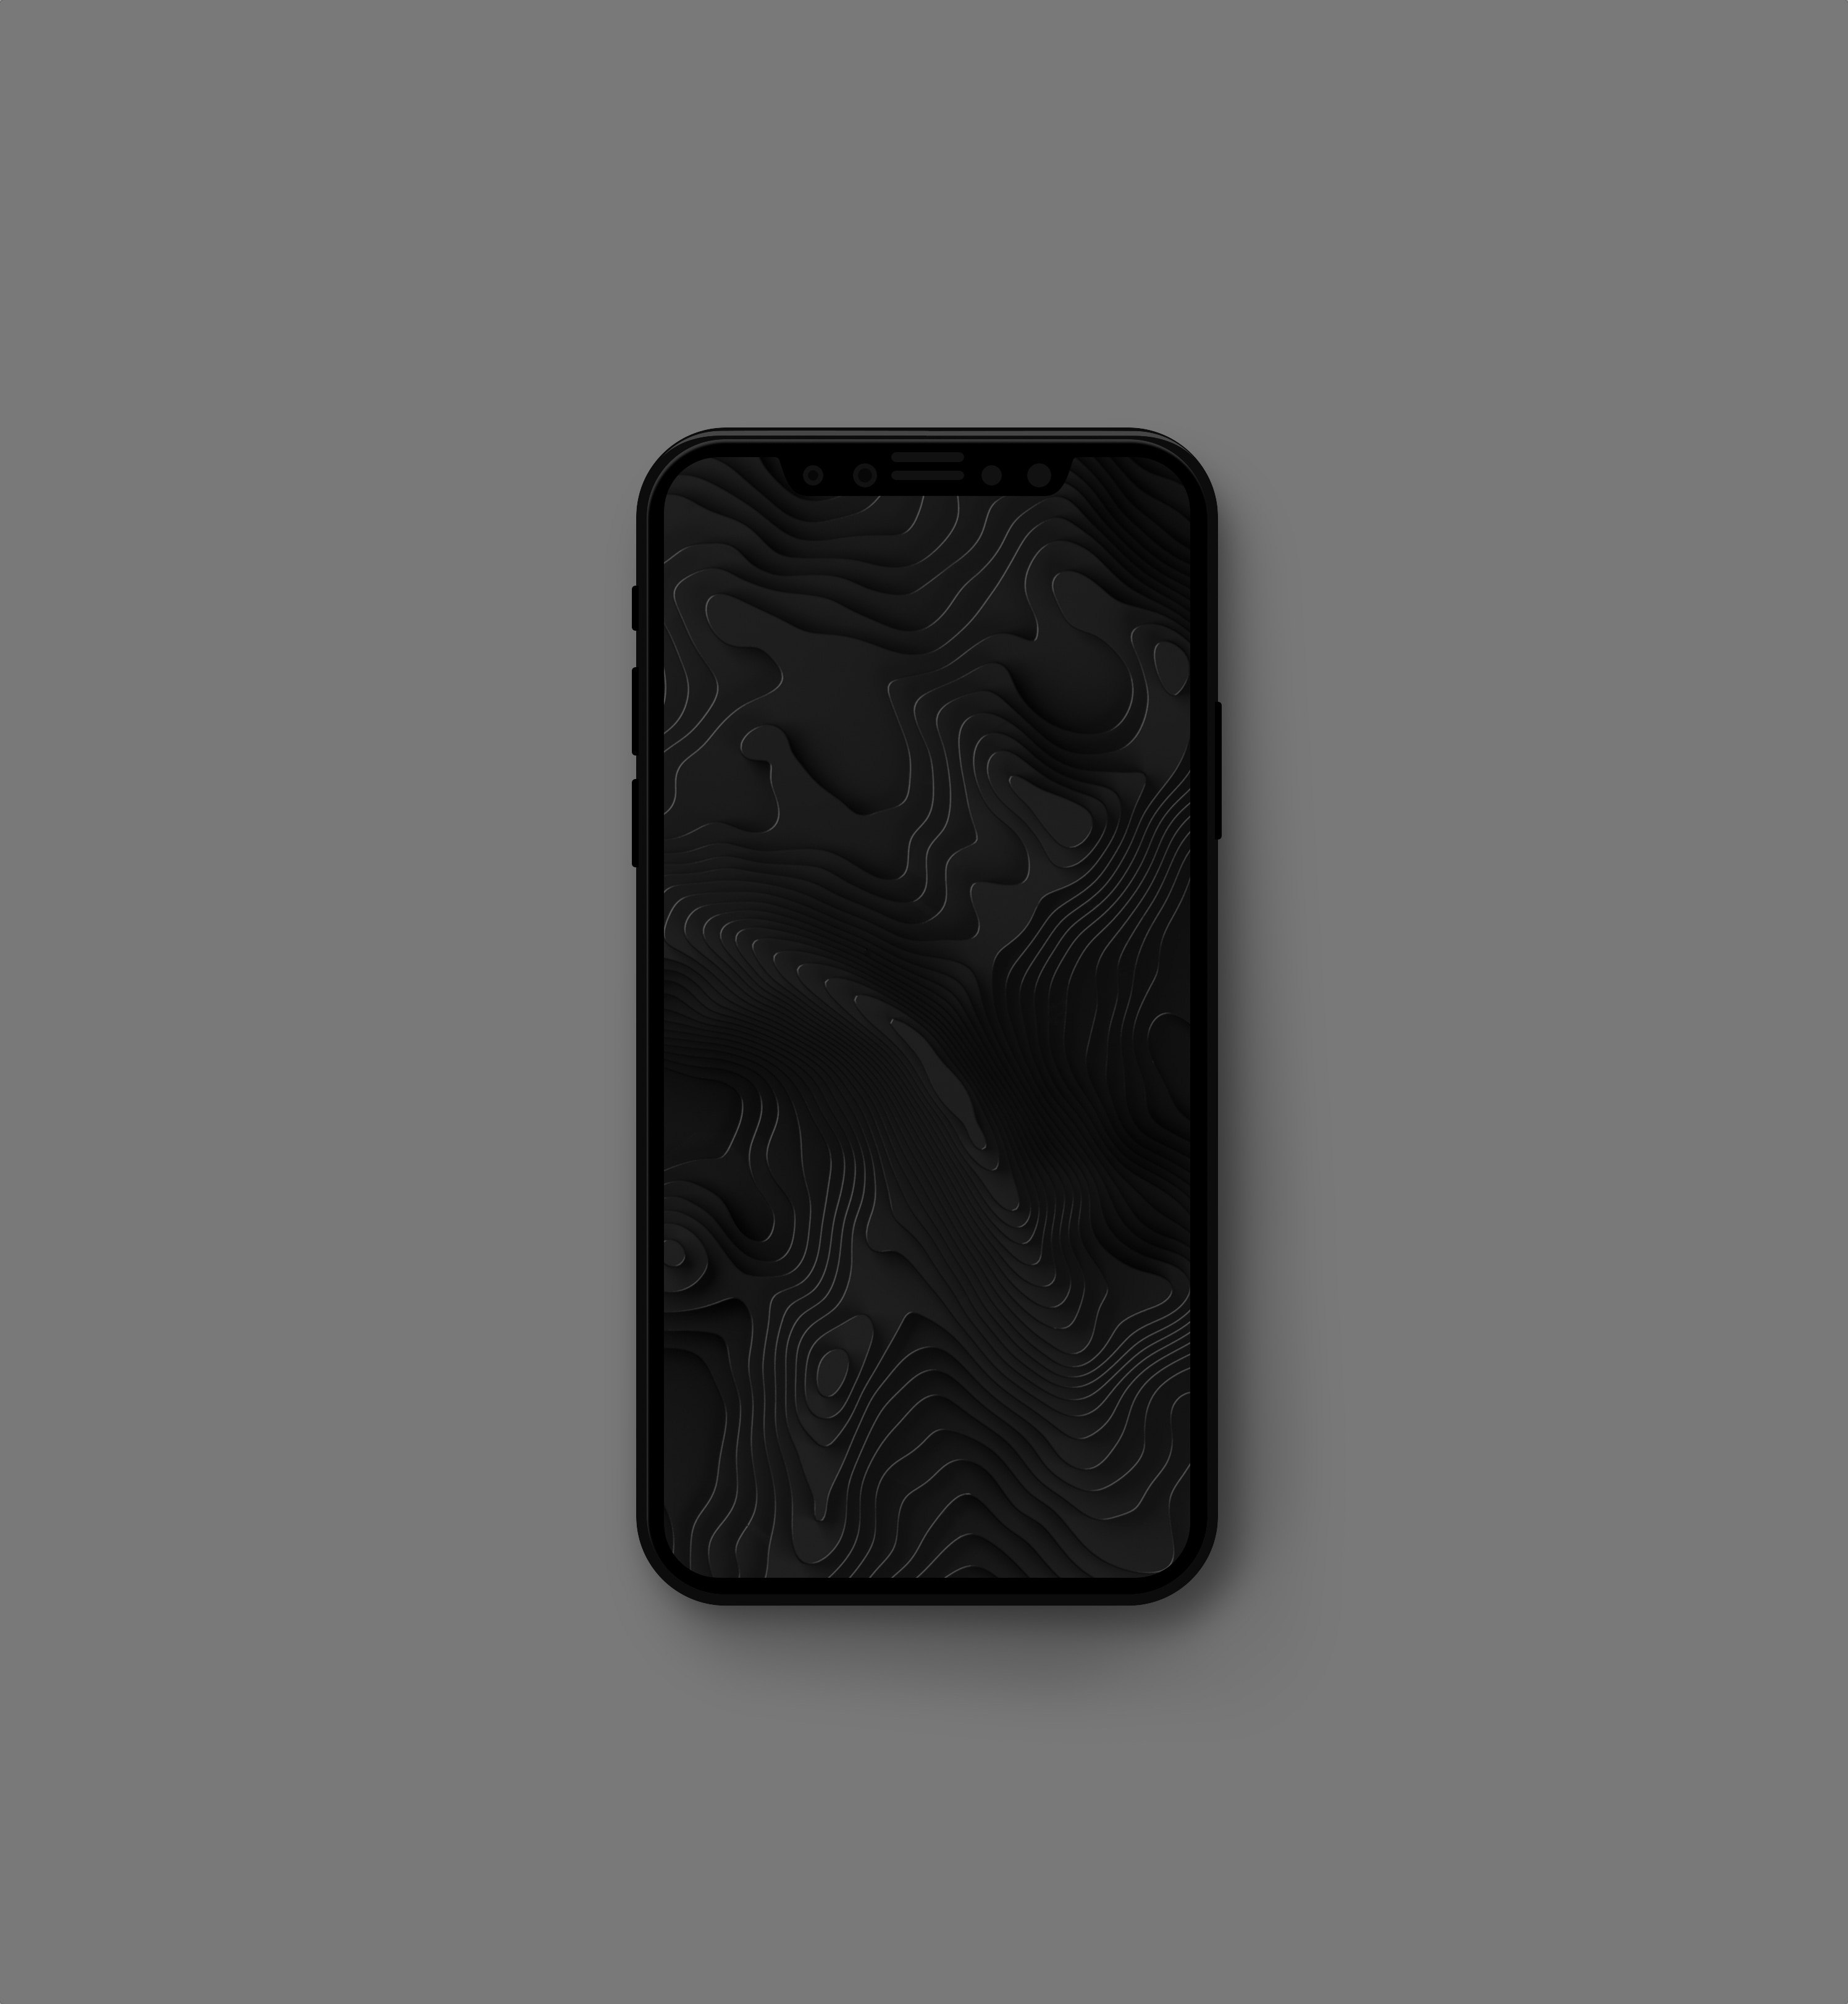 Dark geometric wallpaper on iphone